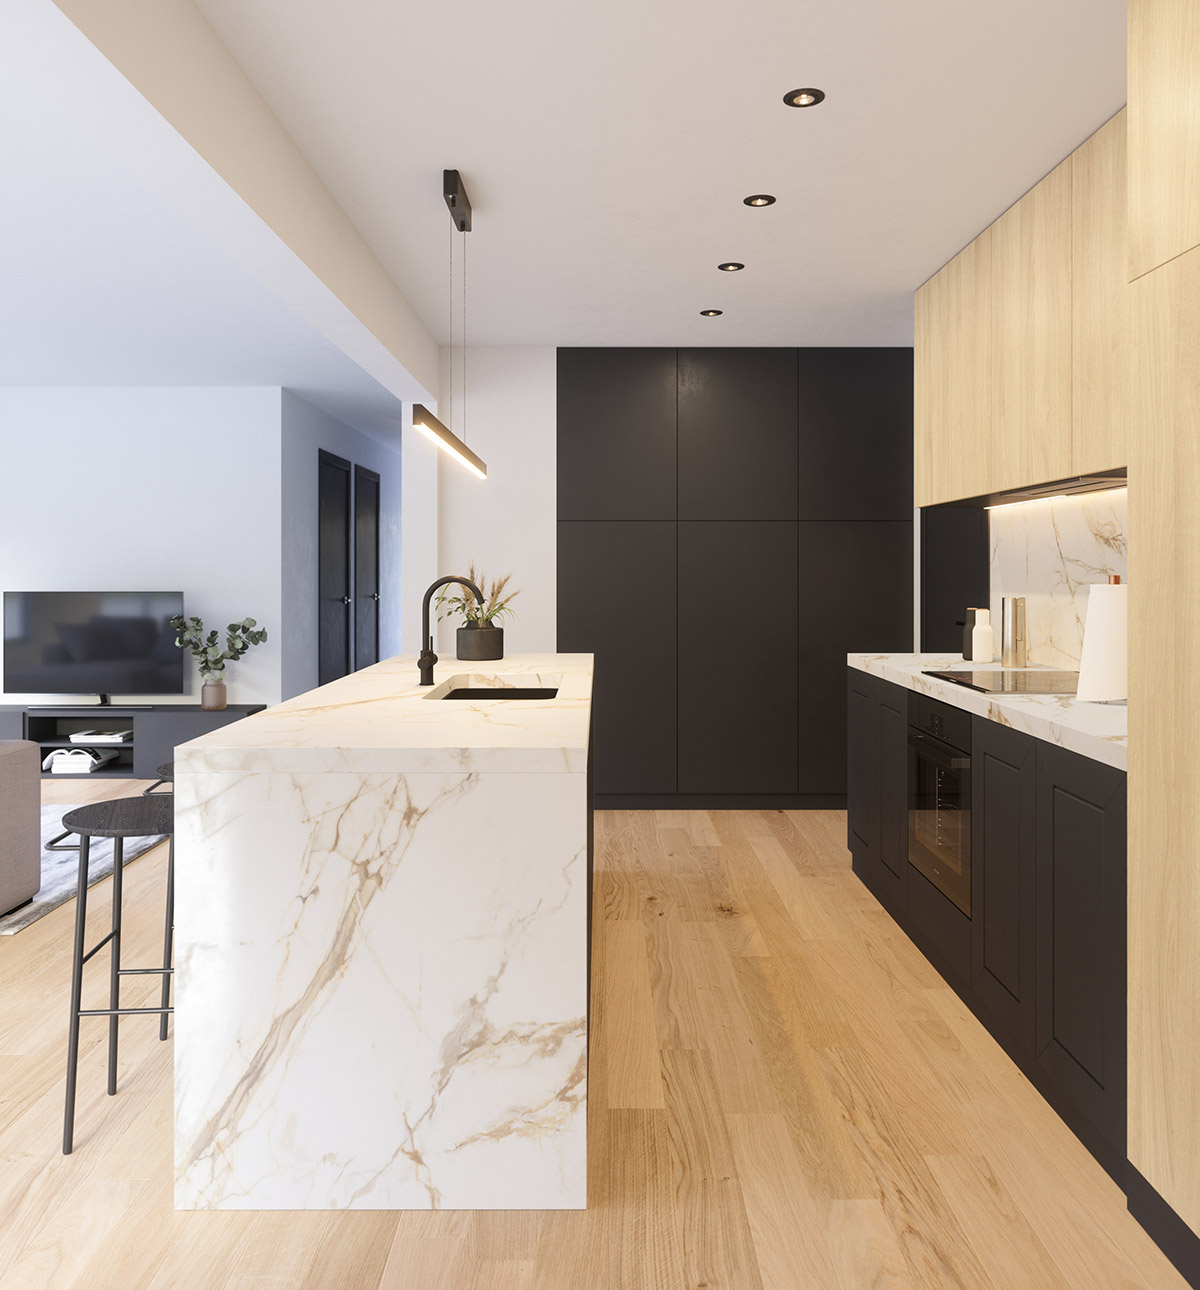 Luxurious kitchen inide the Bold Boundaries modular home by Fox Modular